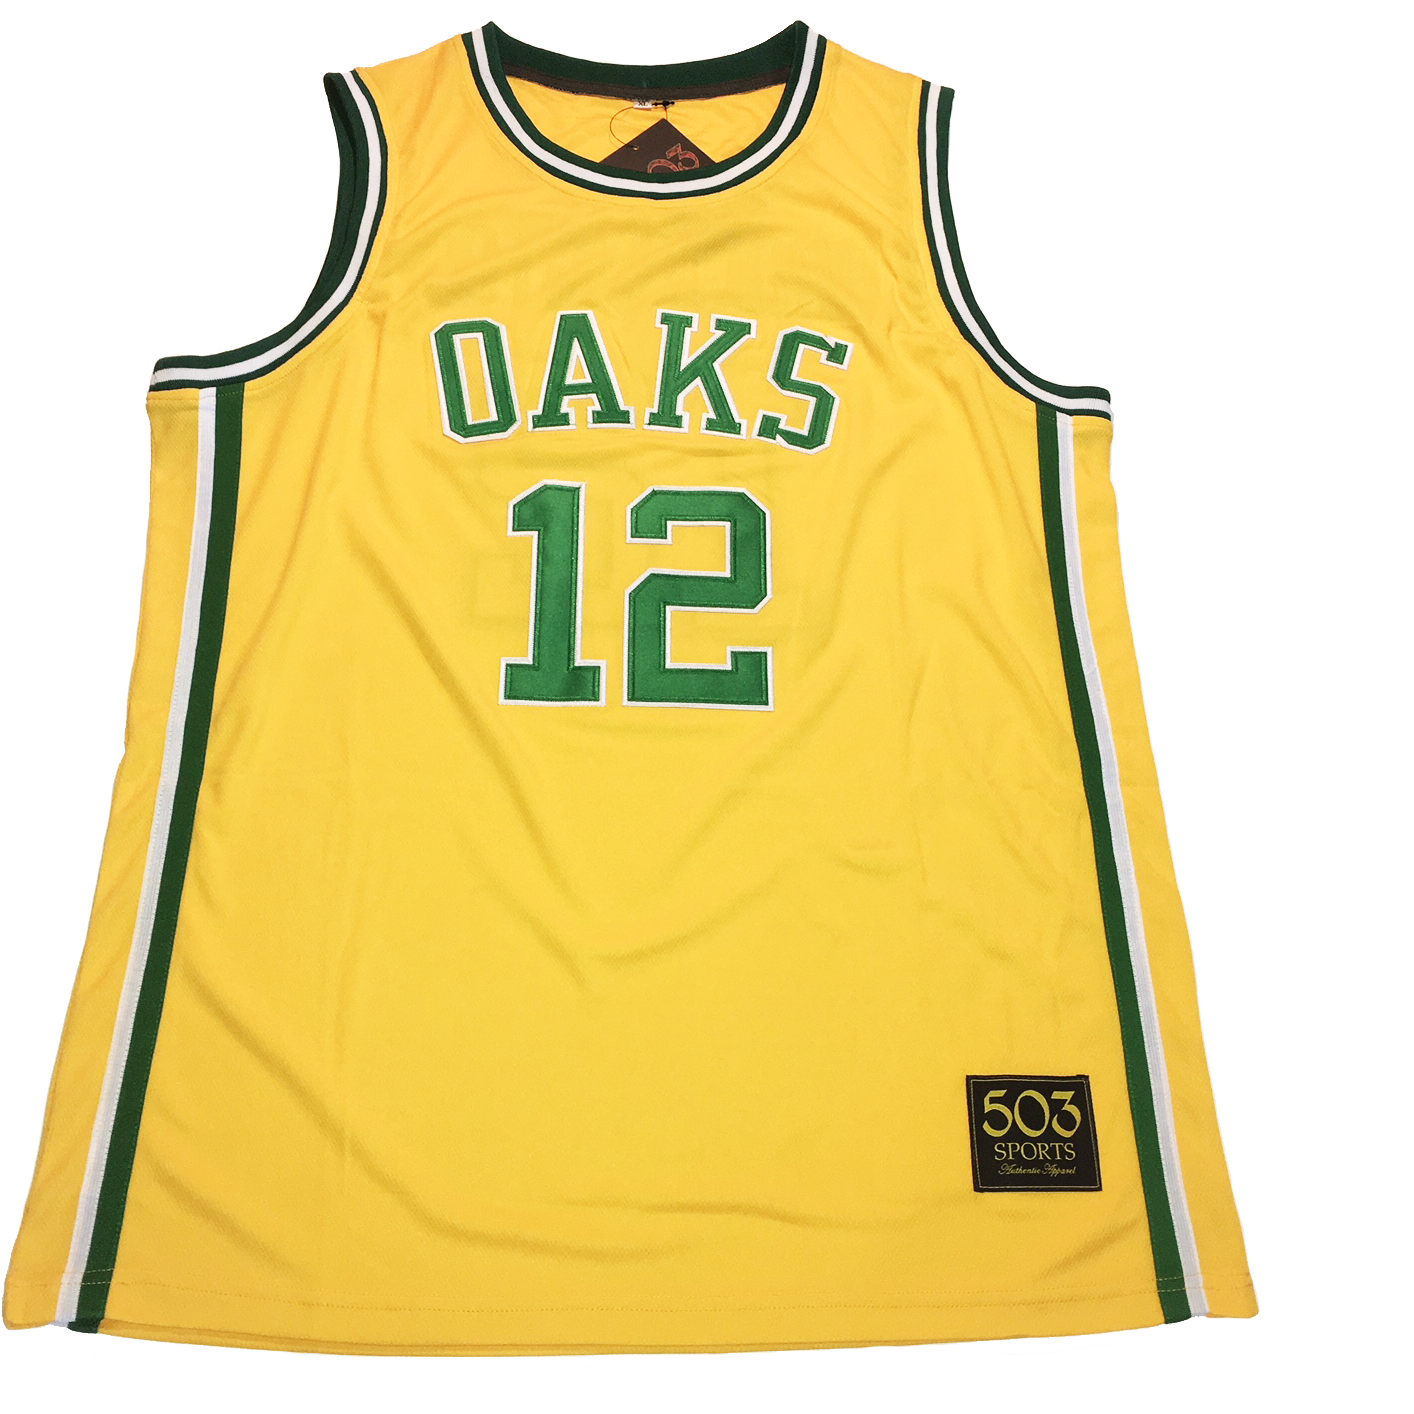 Oakland Oaks ABA Jersey - Green - 5XL - Royal Retros